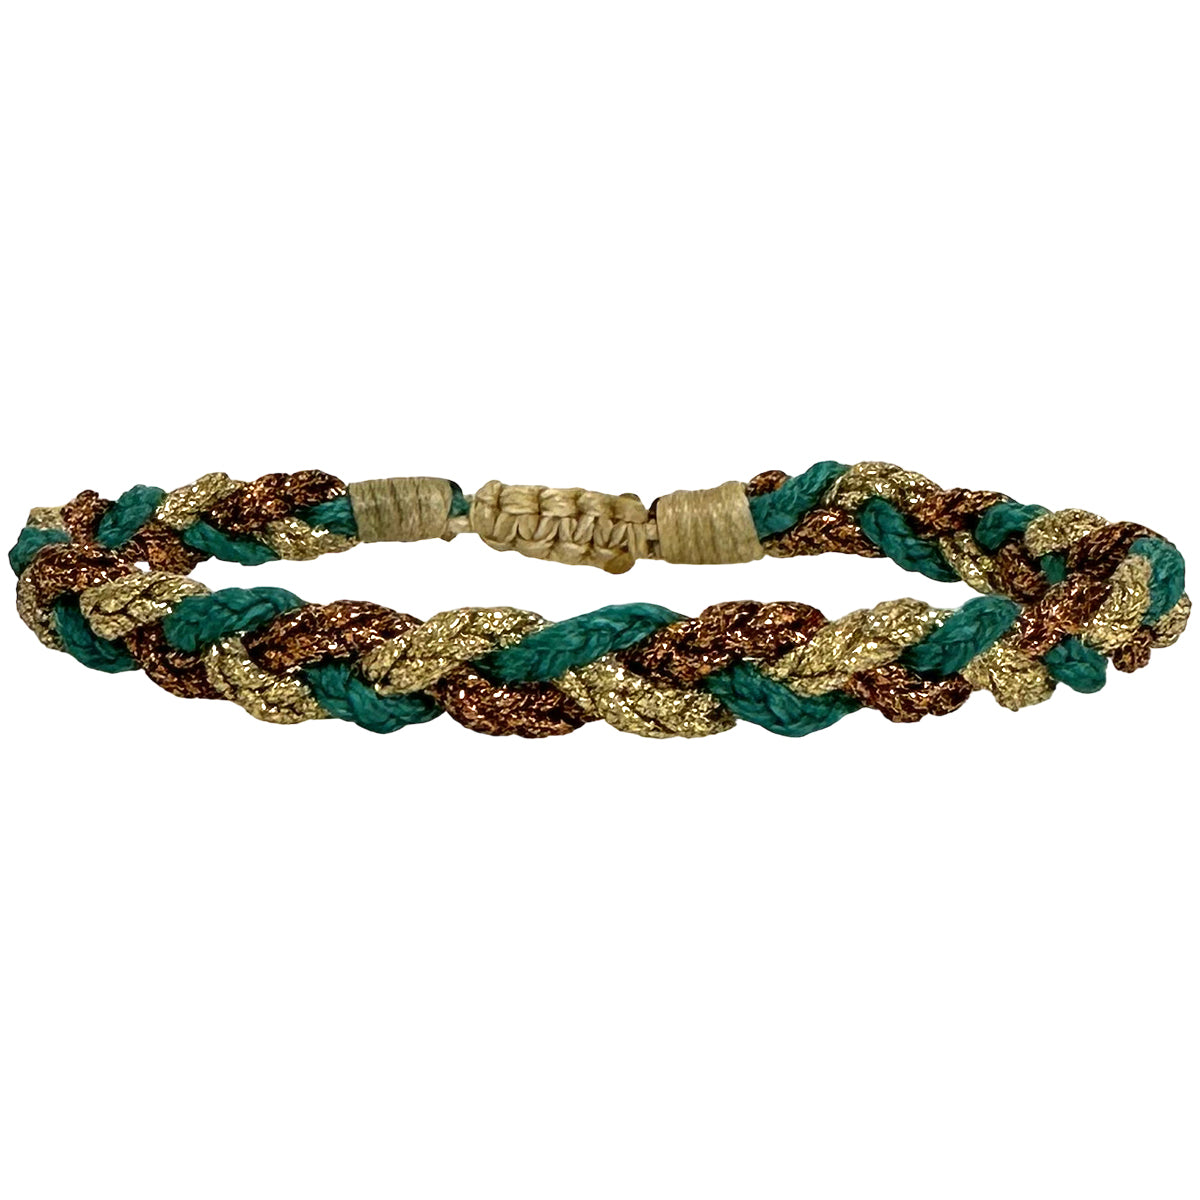 Handmade Verina Bracelet with a Mix of Vibrant Colour Threads